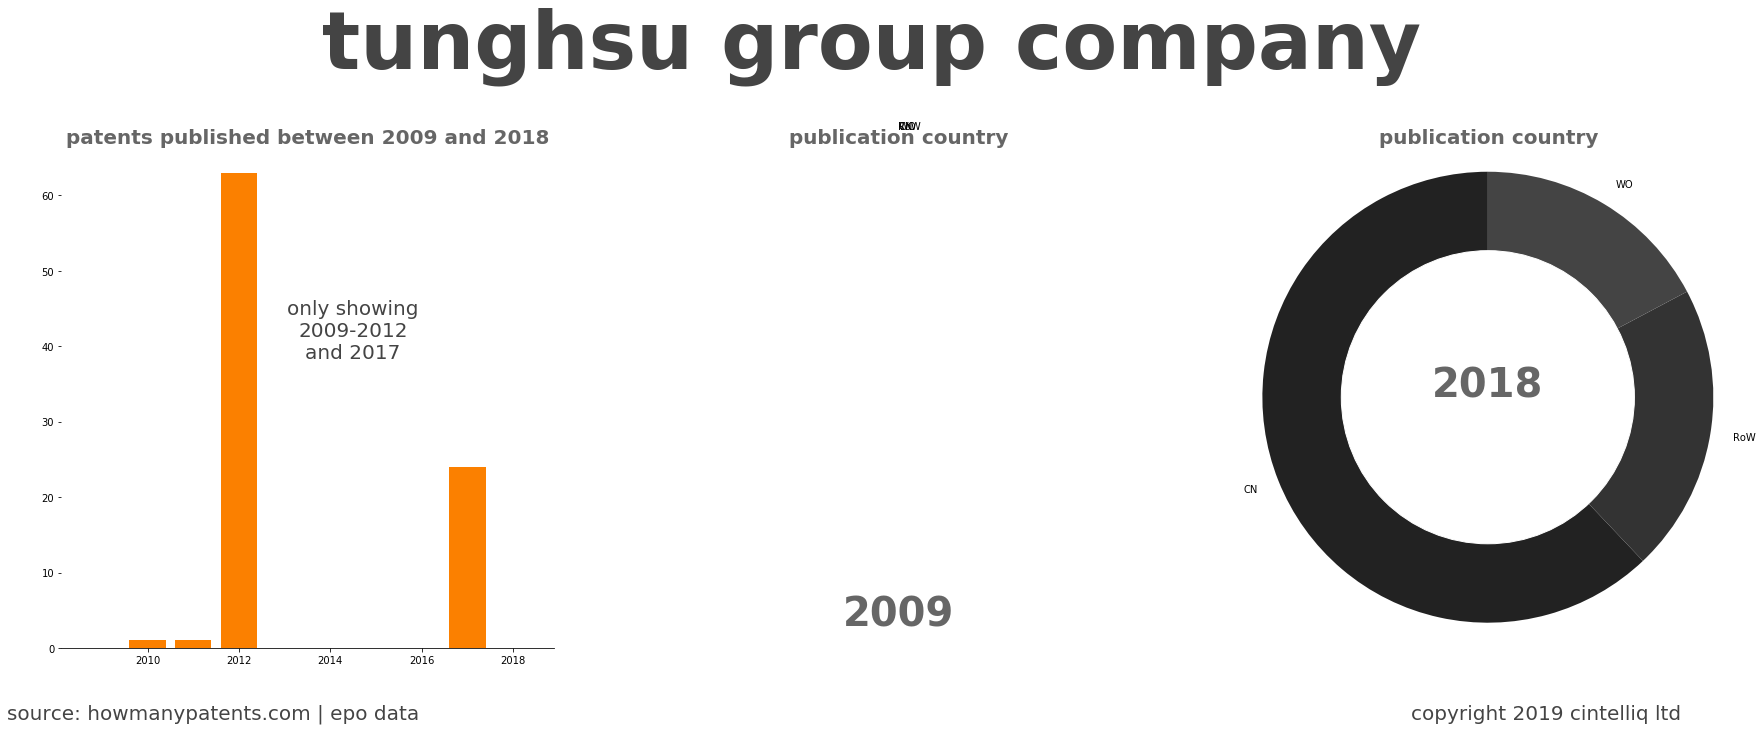 summary of patents for Tunghsu Group Company